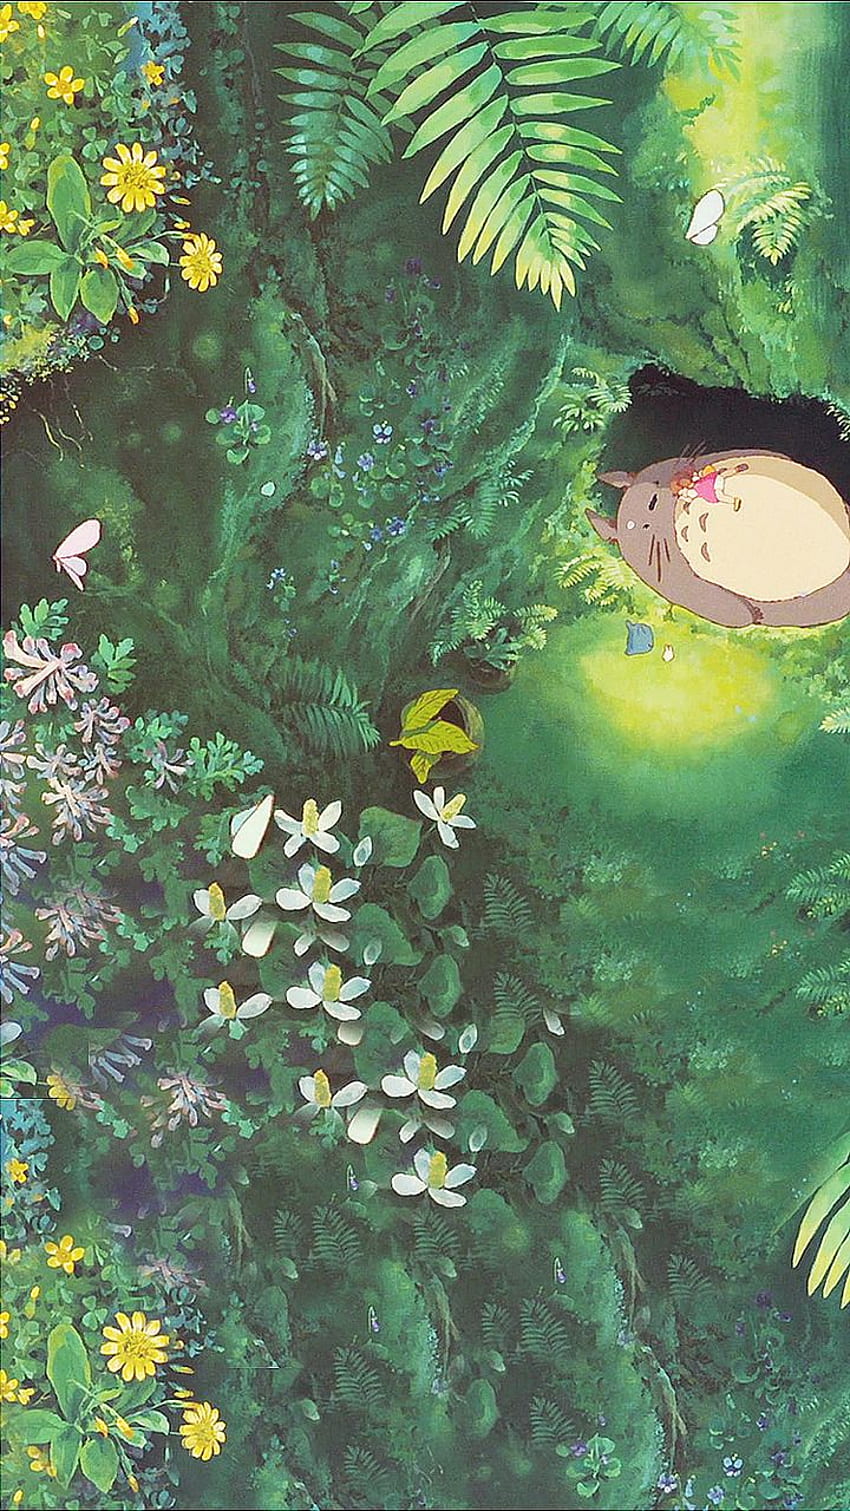 73 Studio GhibliThemed Wallpapers For Smartphones  Bored Panda